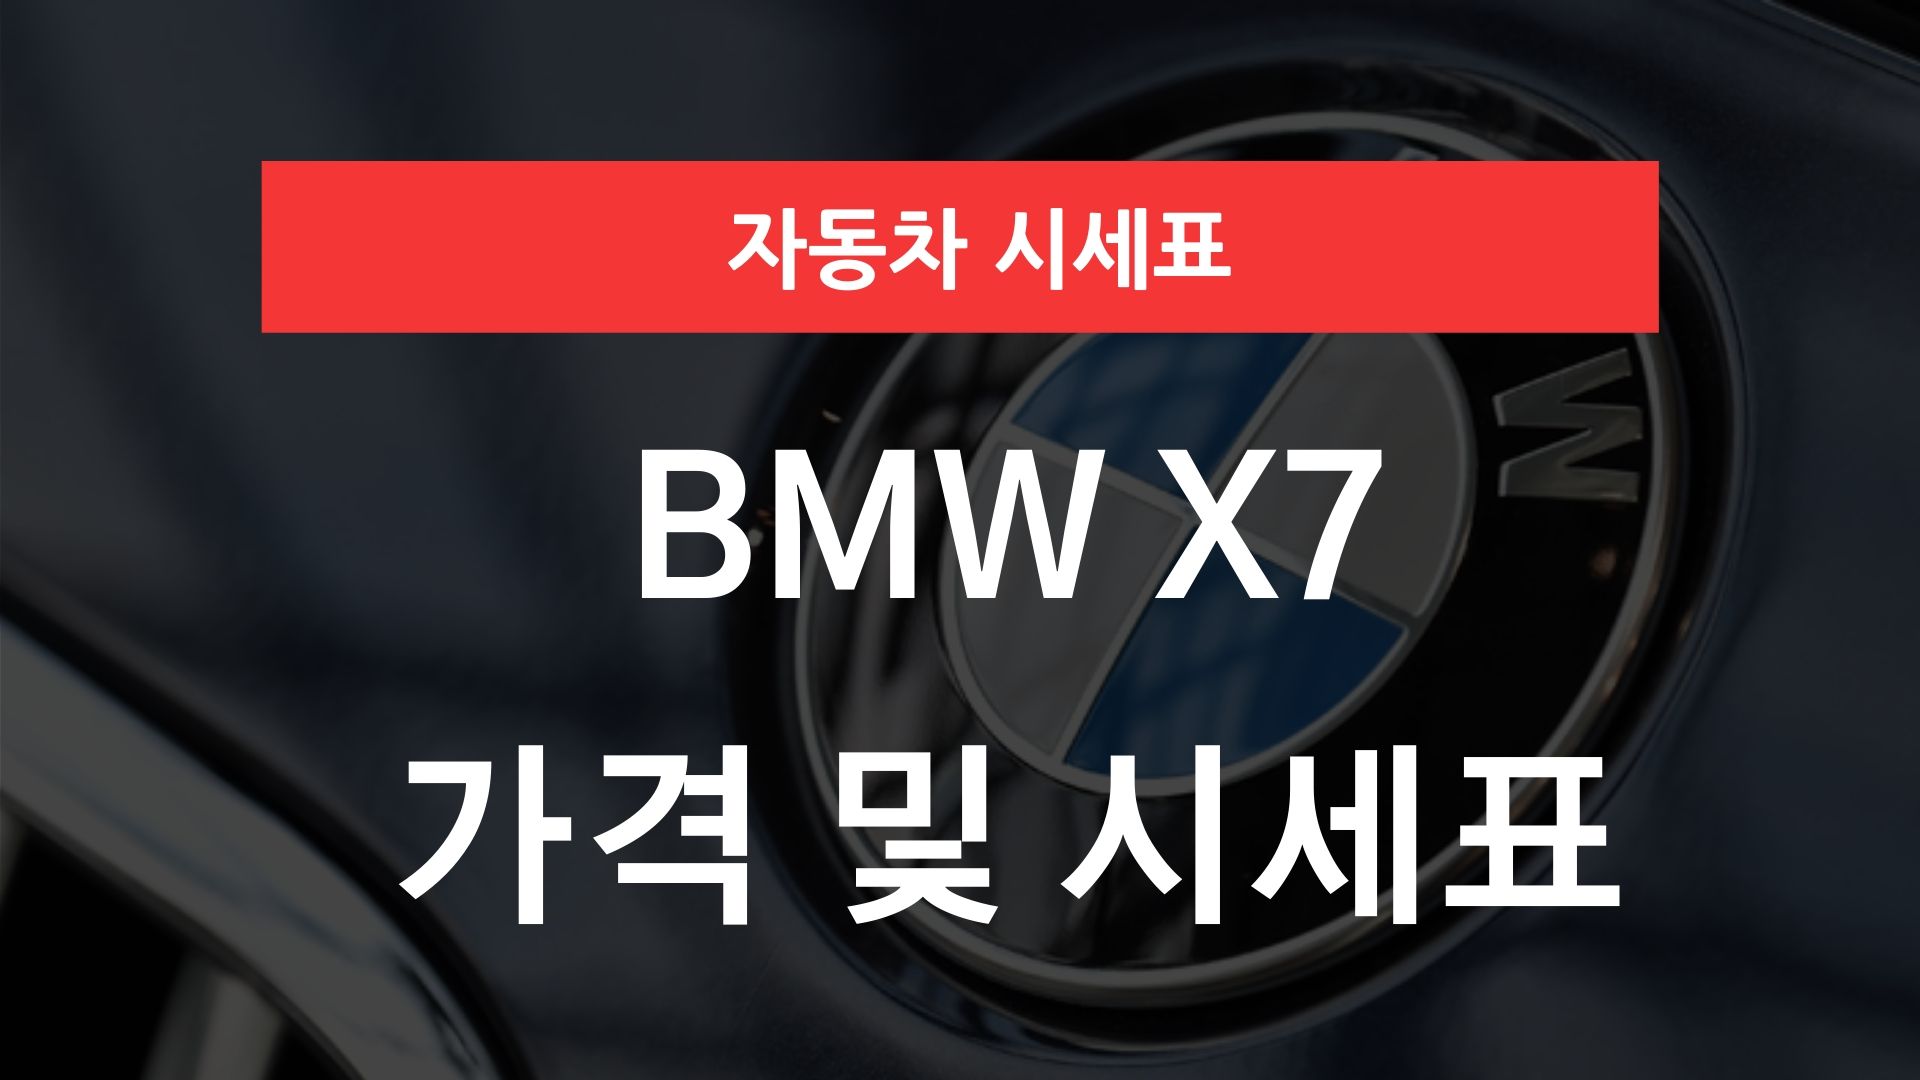 BMW X7 가격